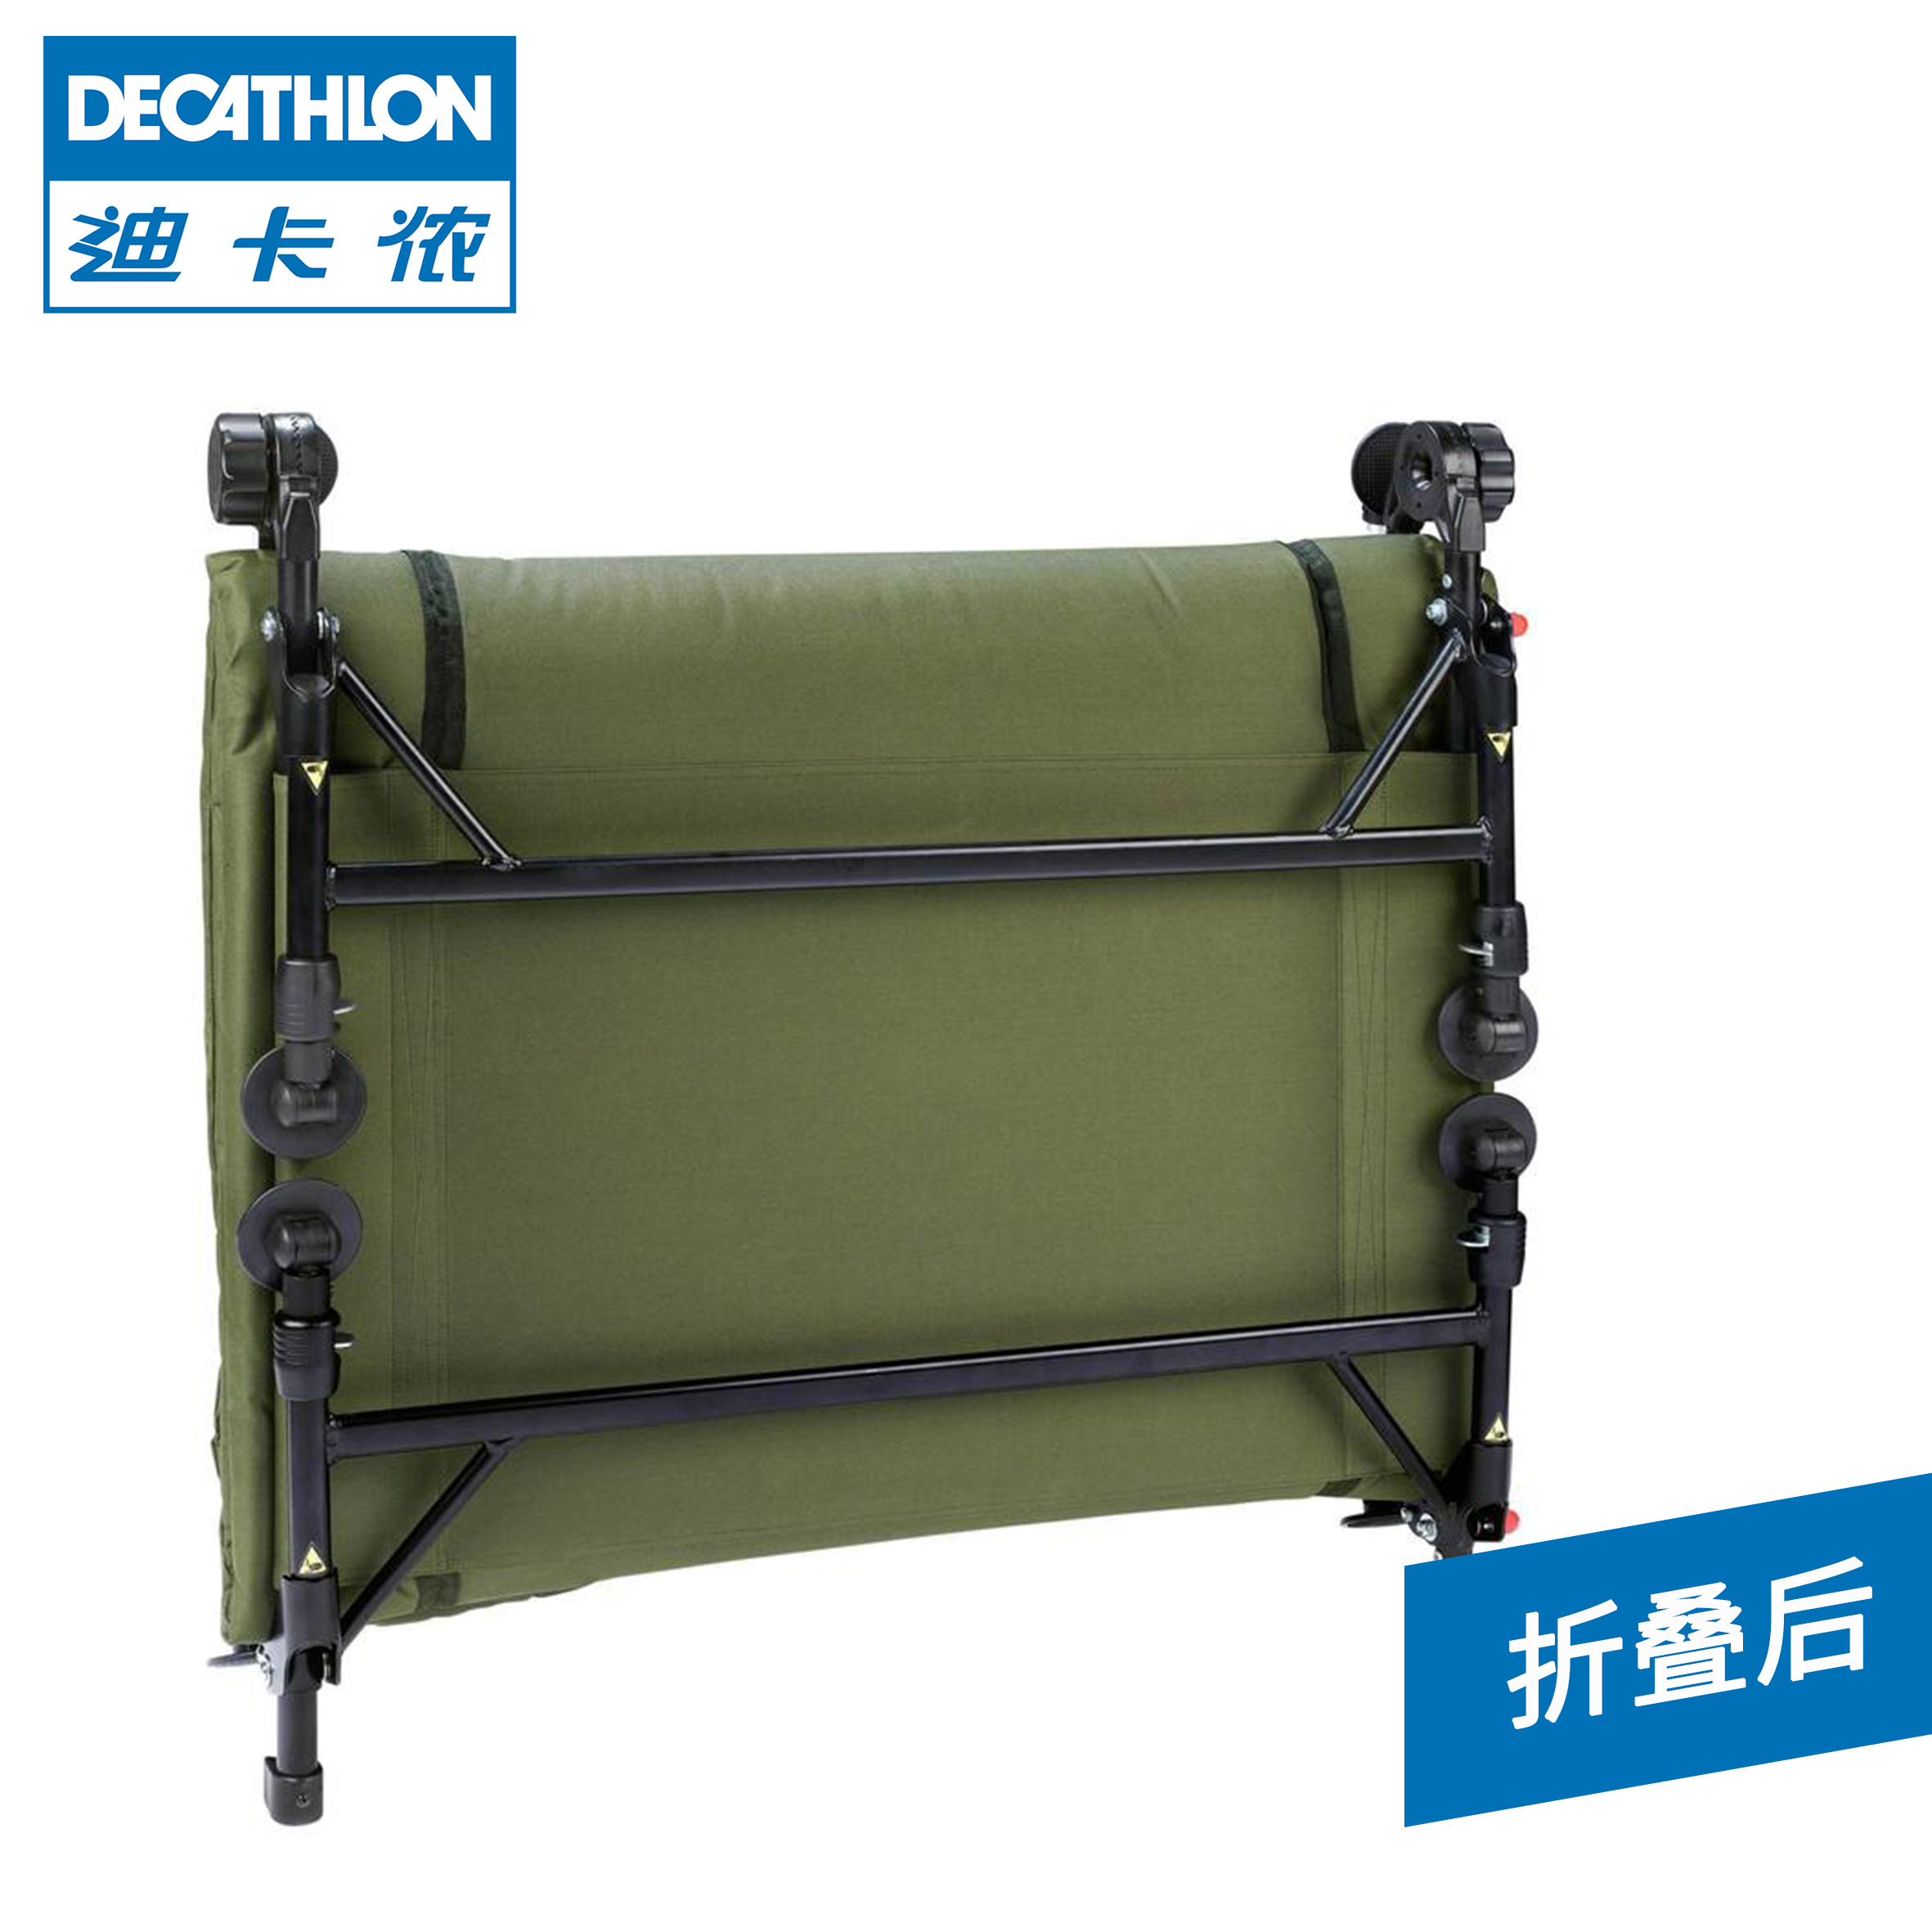 decathlon folding bed